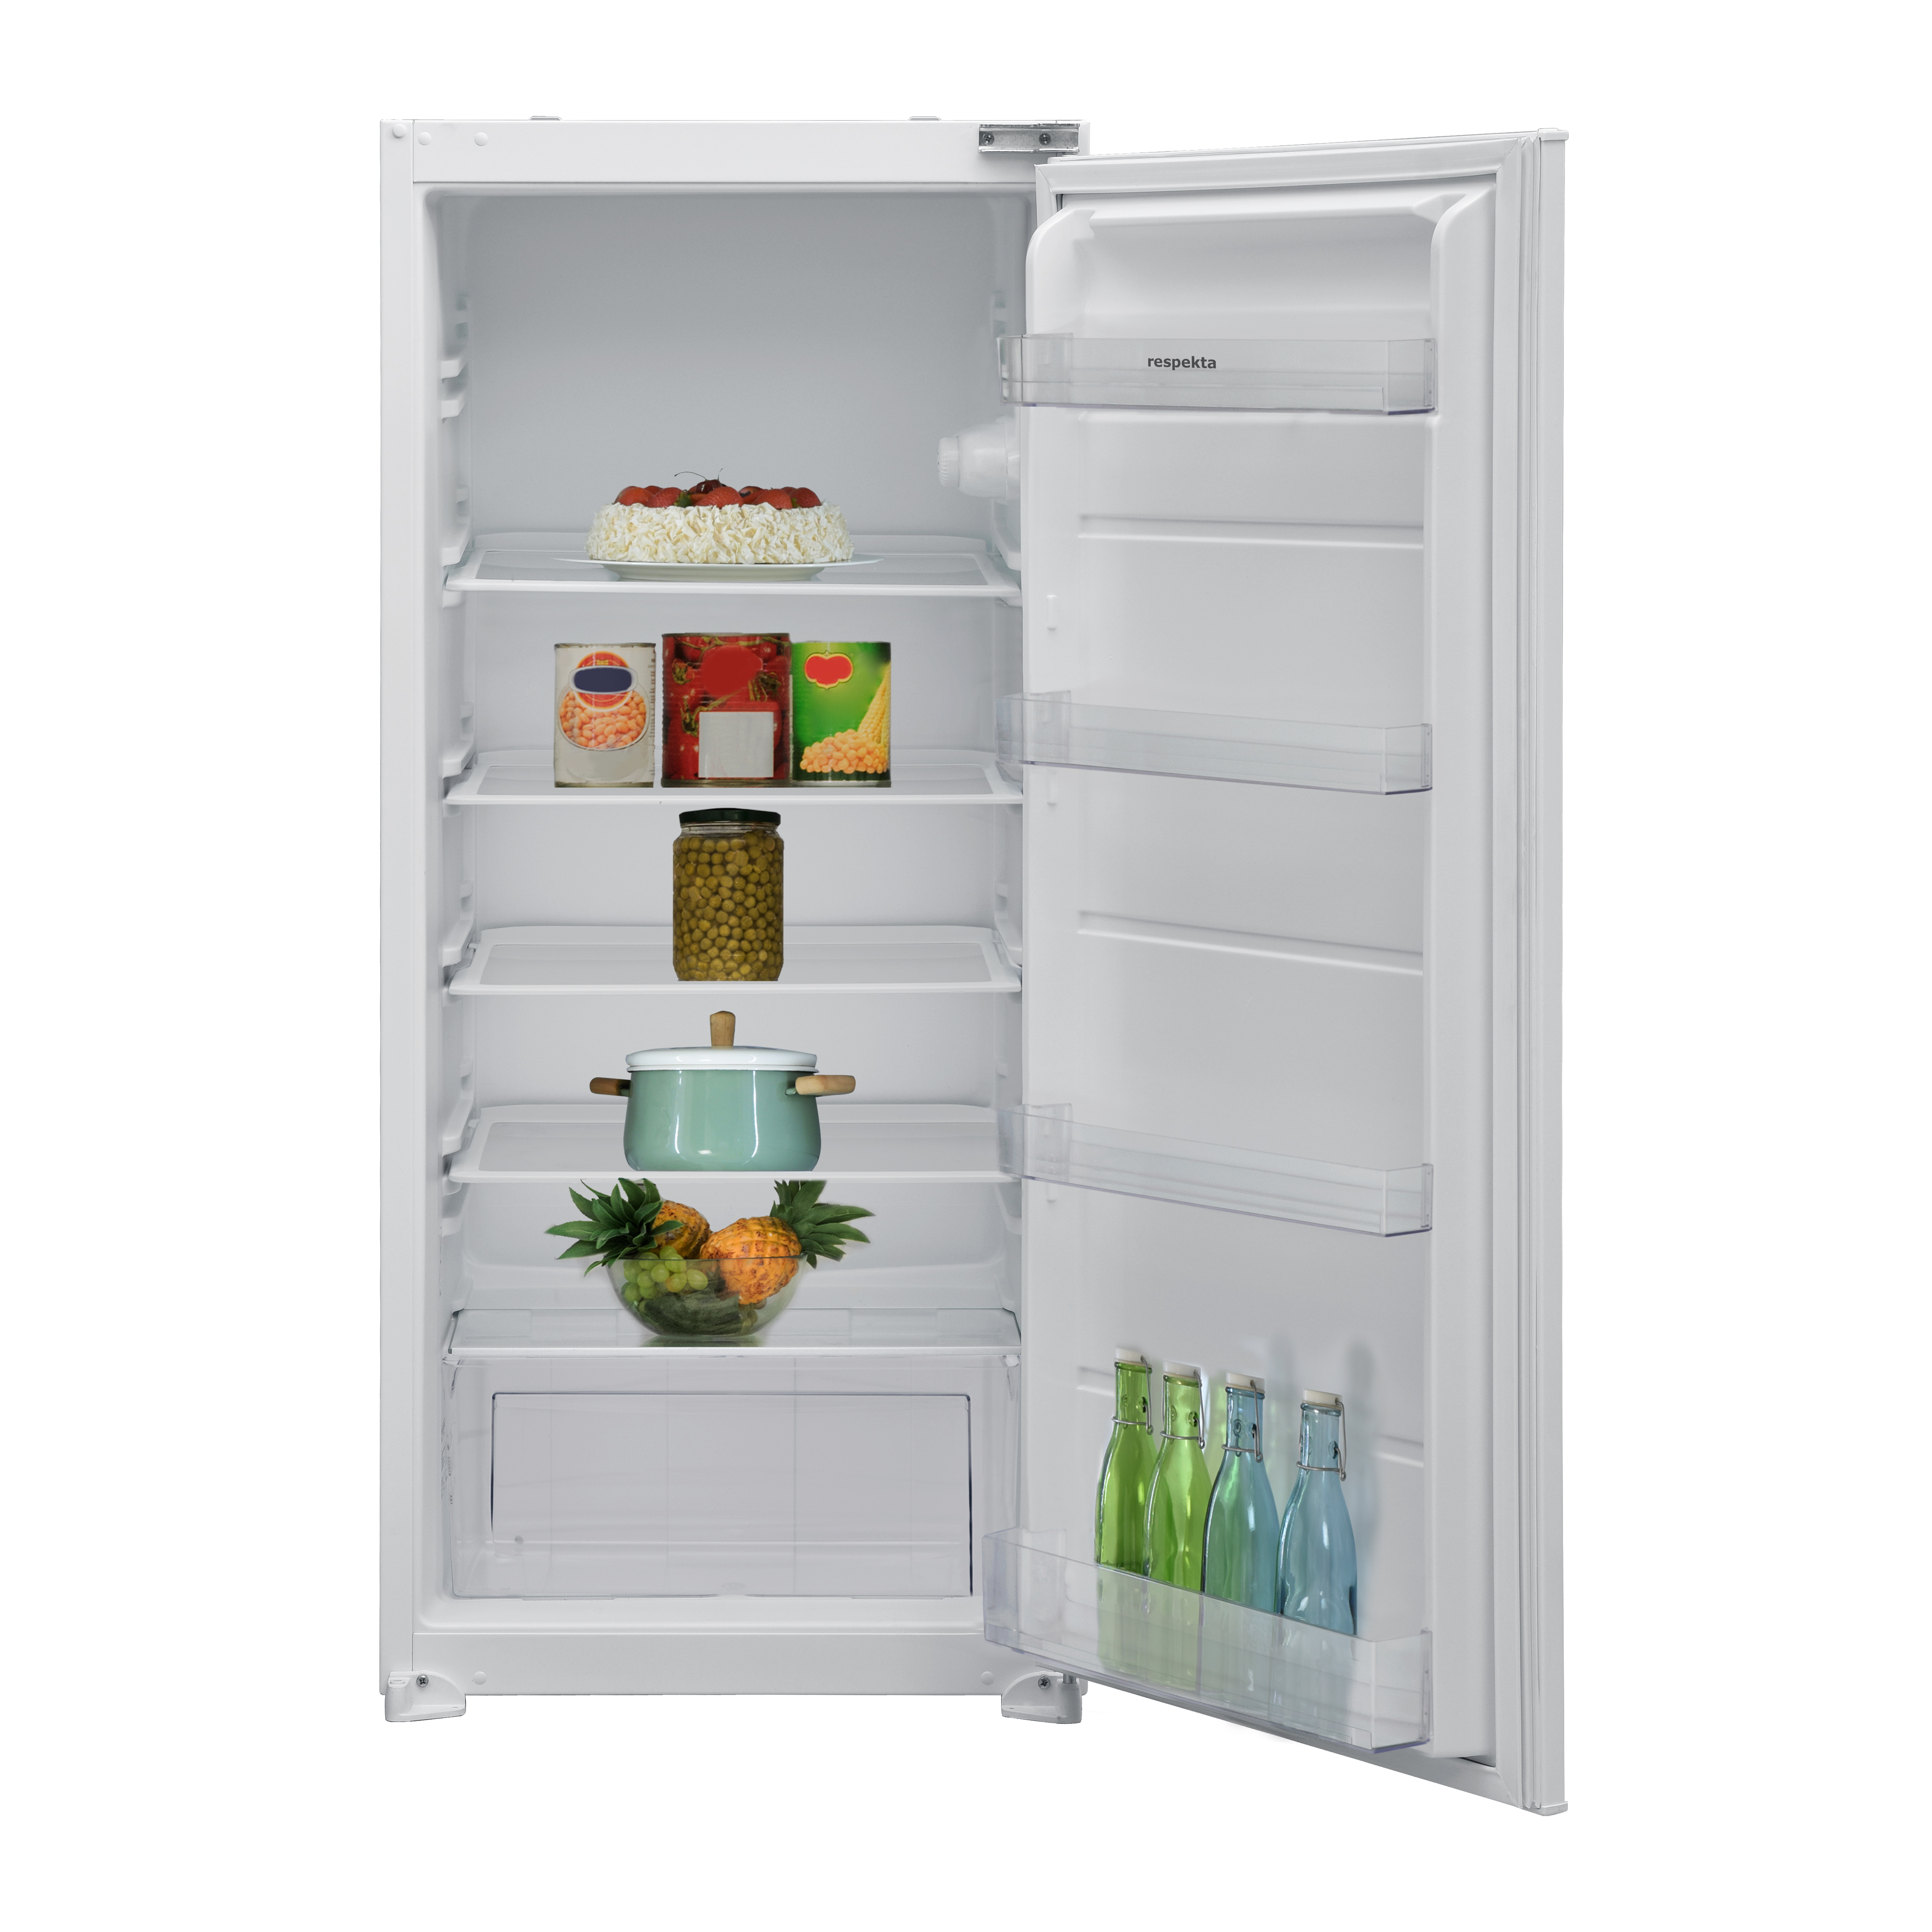 Respekta KS122.0 Einbau Kühlschrank ohne